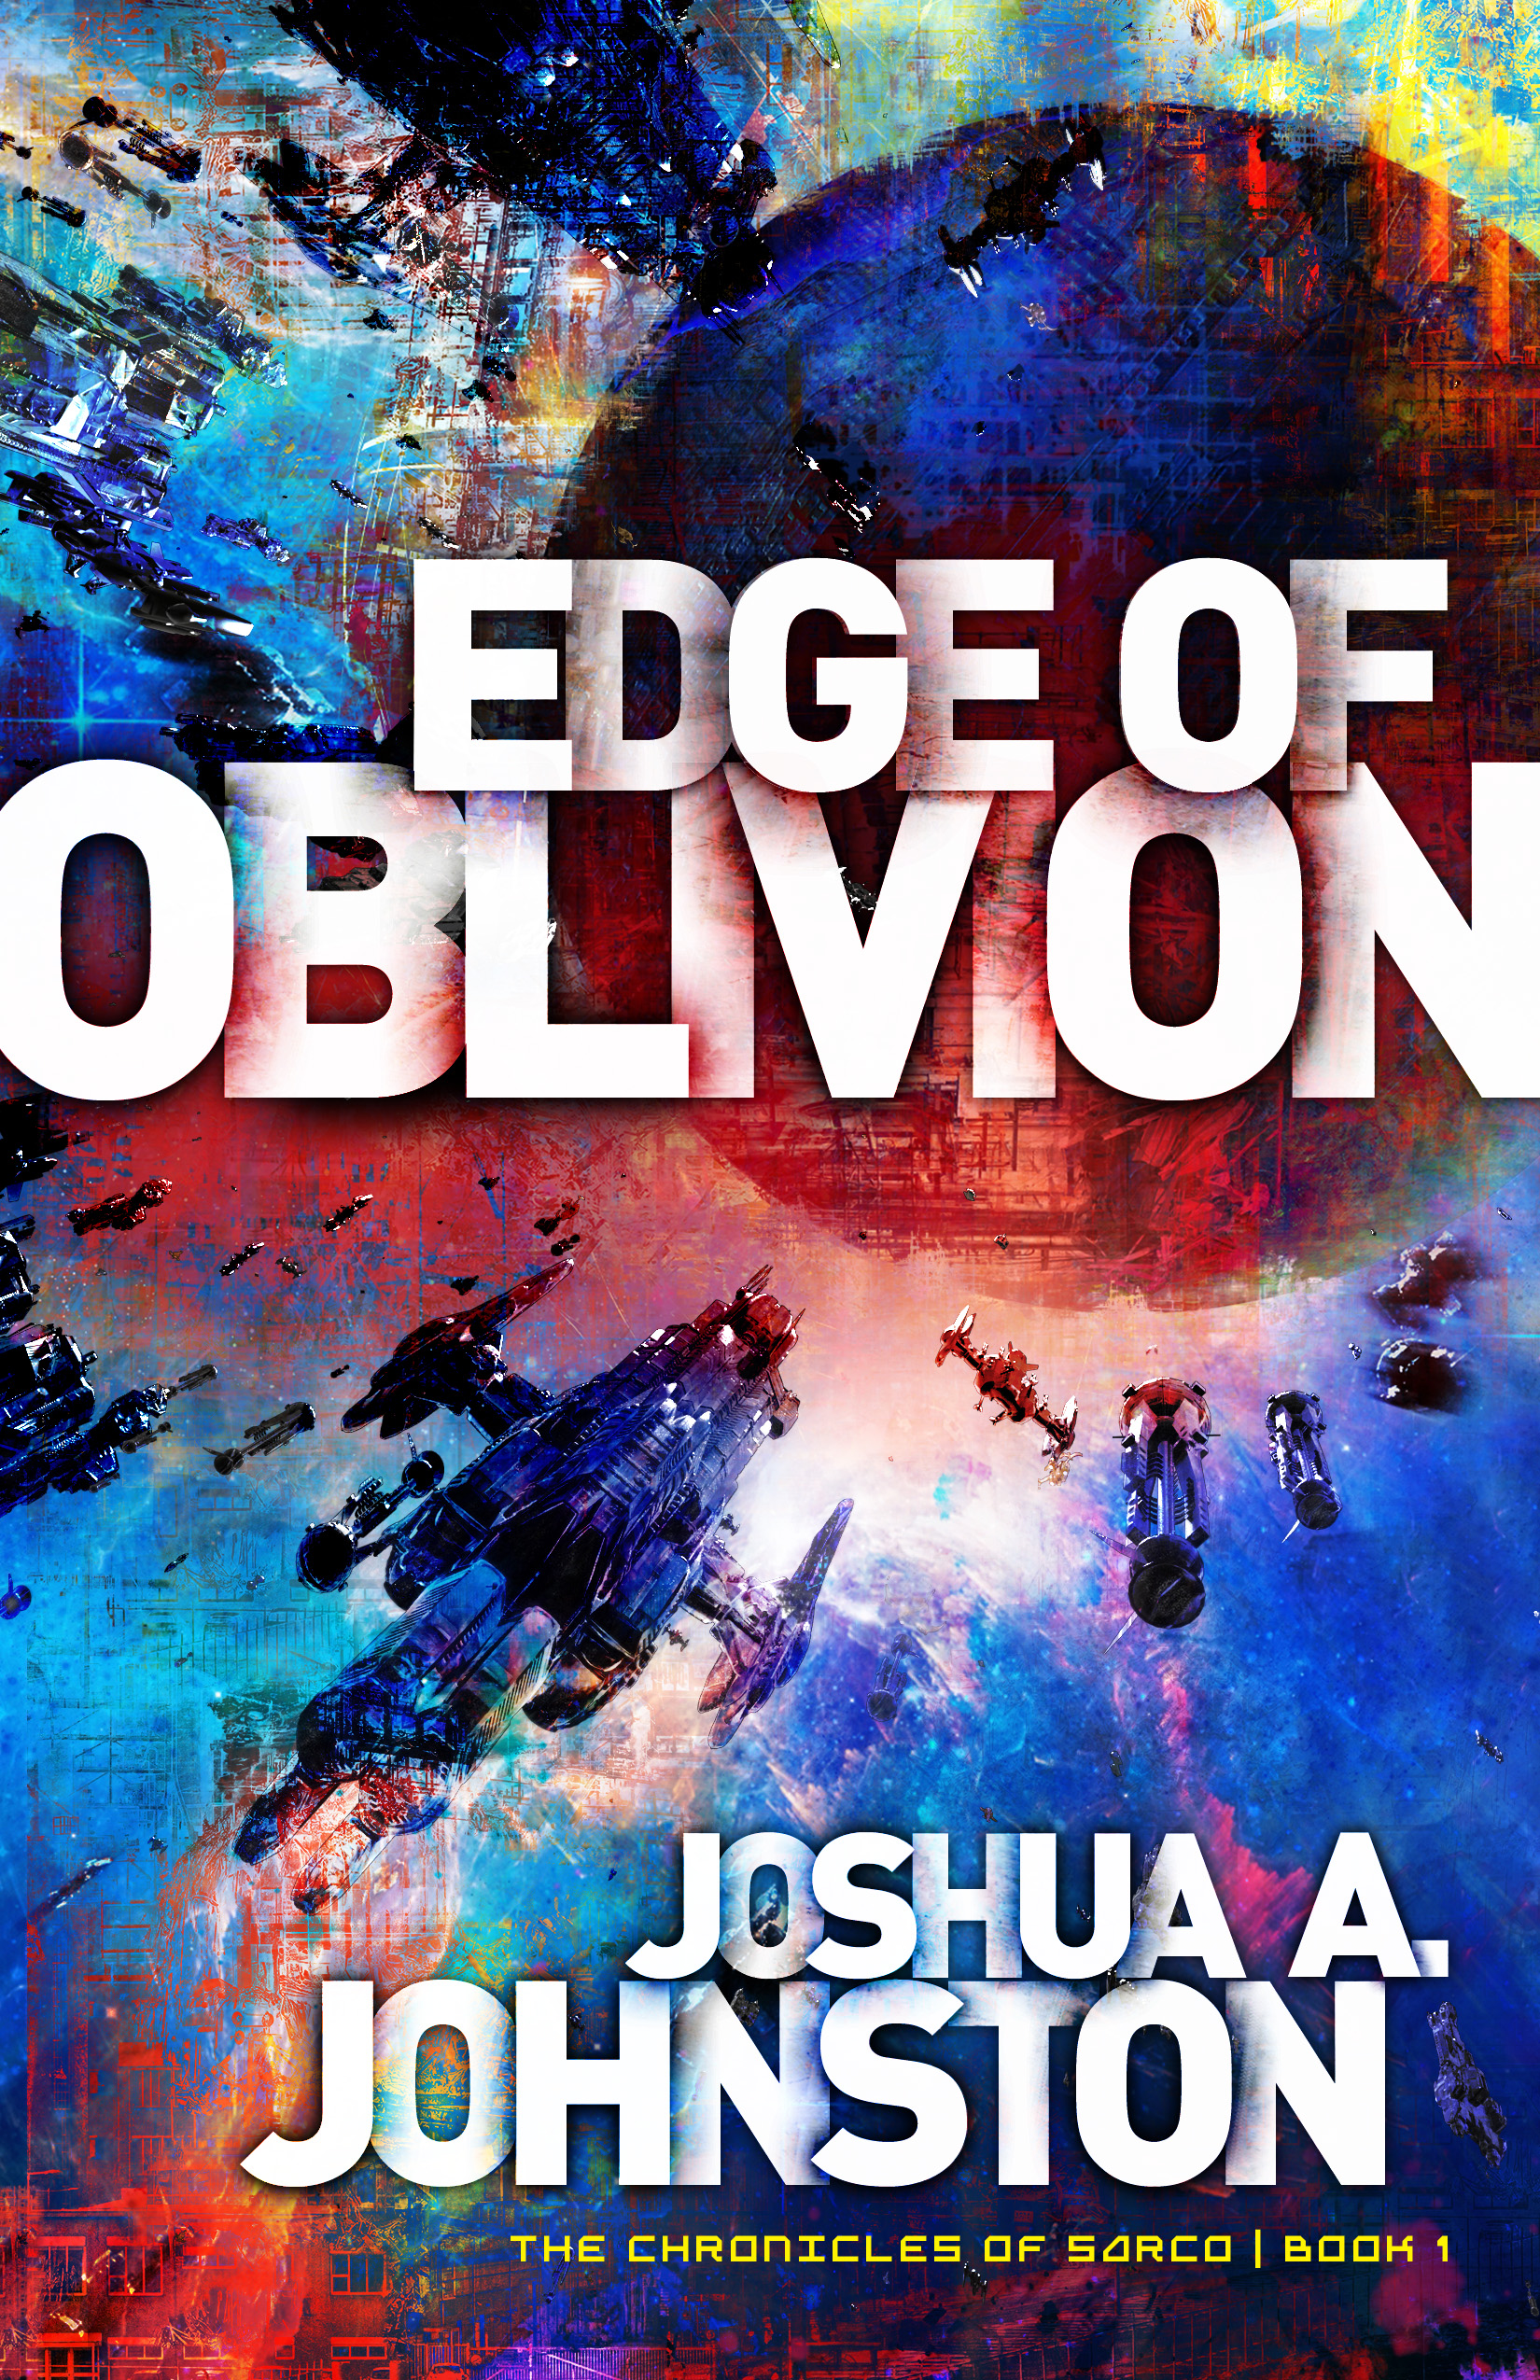 Edge of Oblivion